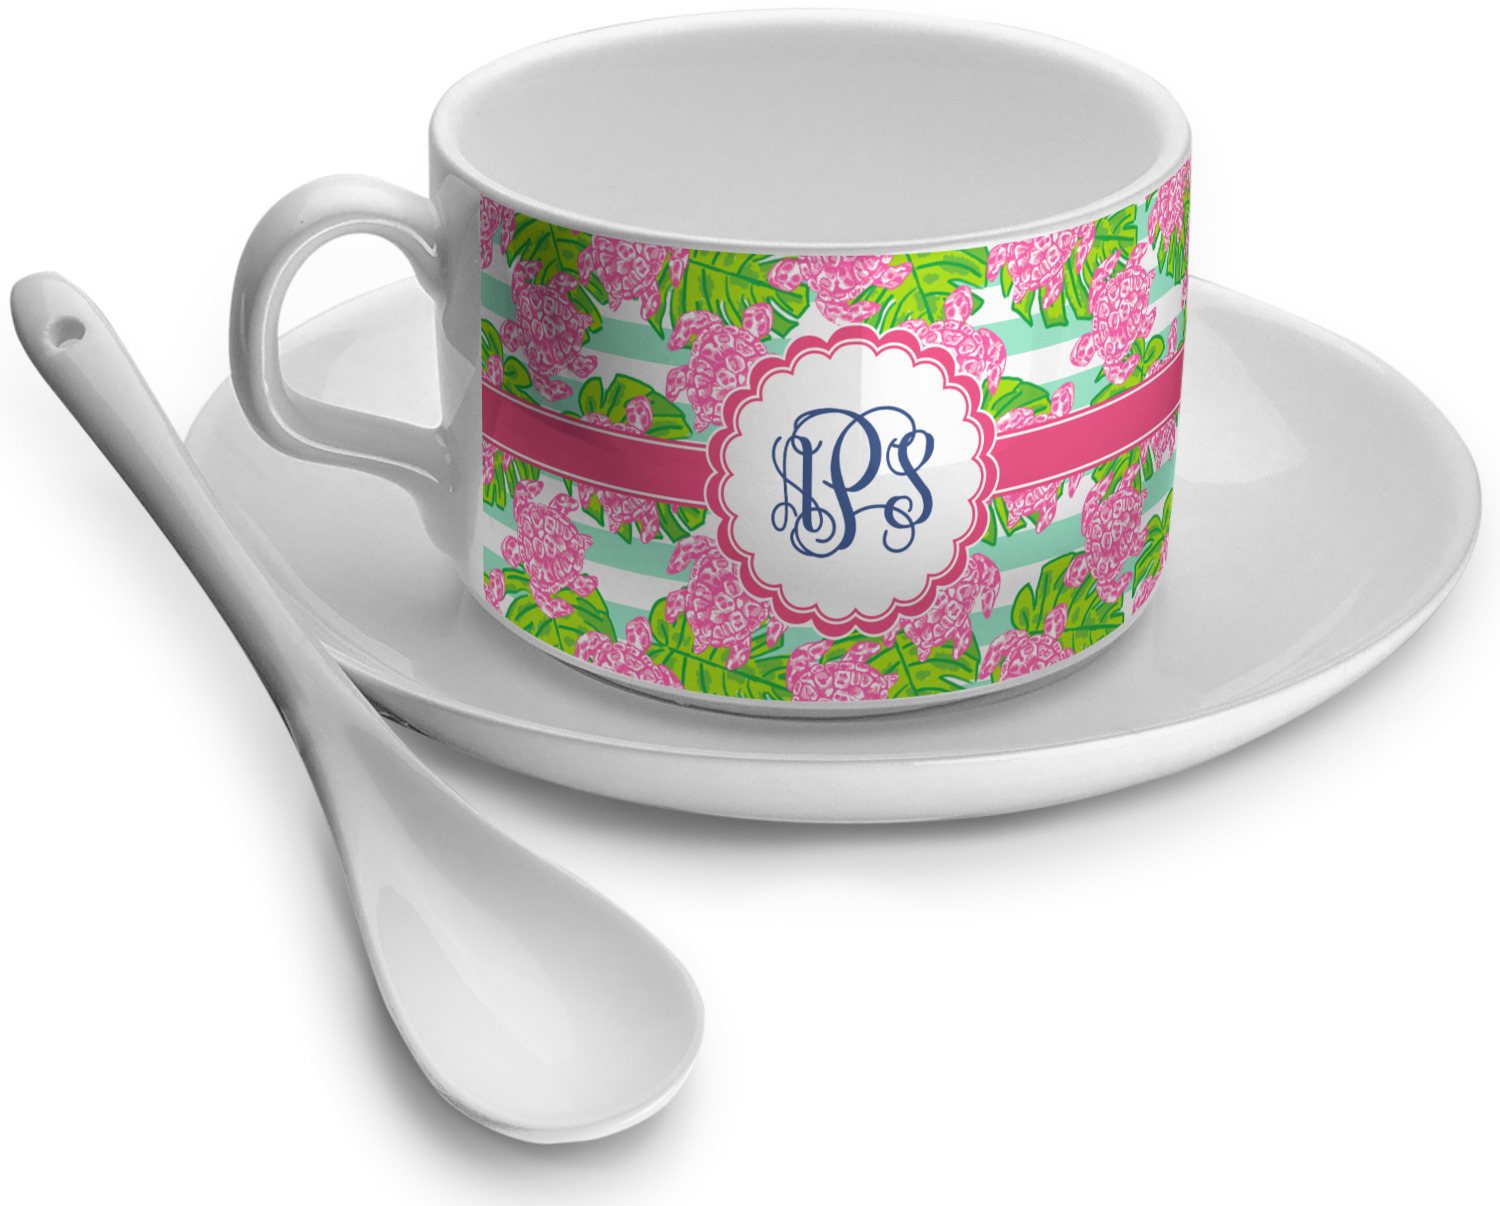 https://www.youcustomizeit.com/common/MAKE/1107405/Preppy-Tea-Cup-Single-2.jpg?lm=1684767847